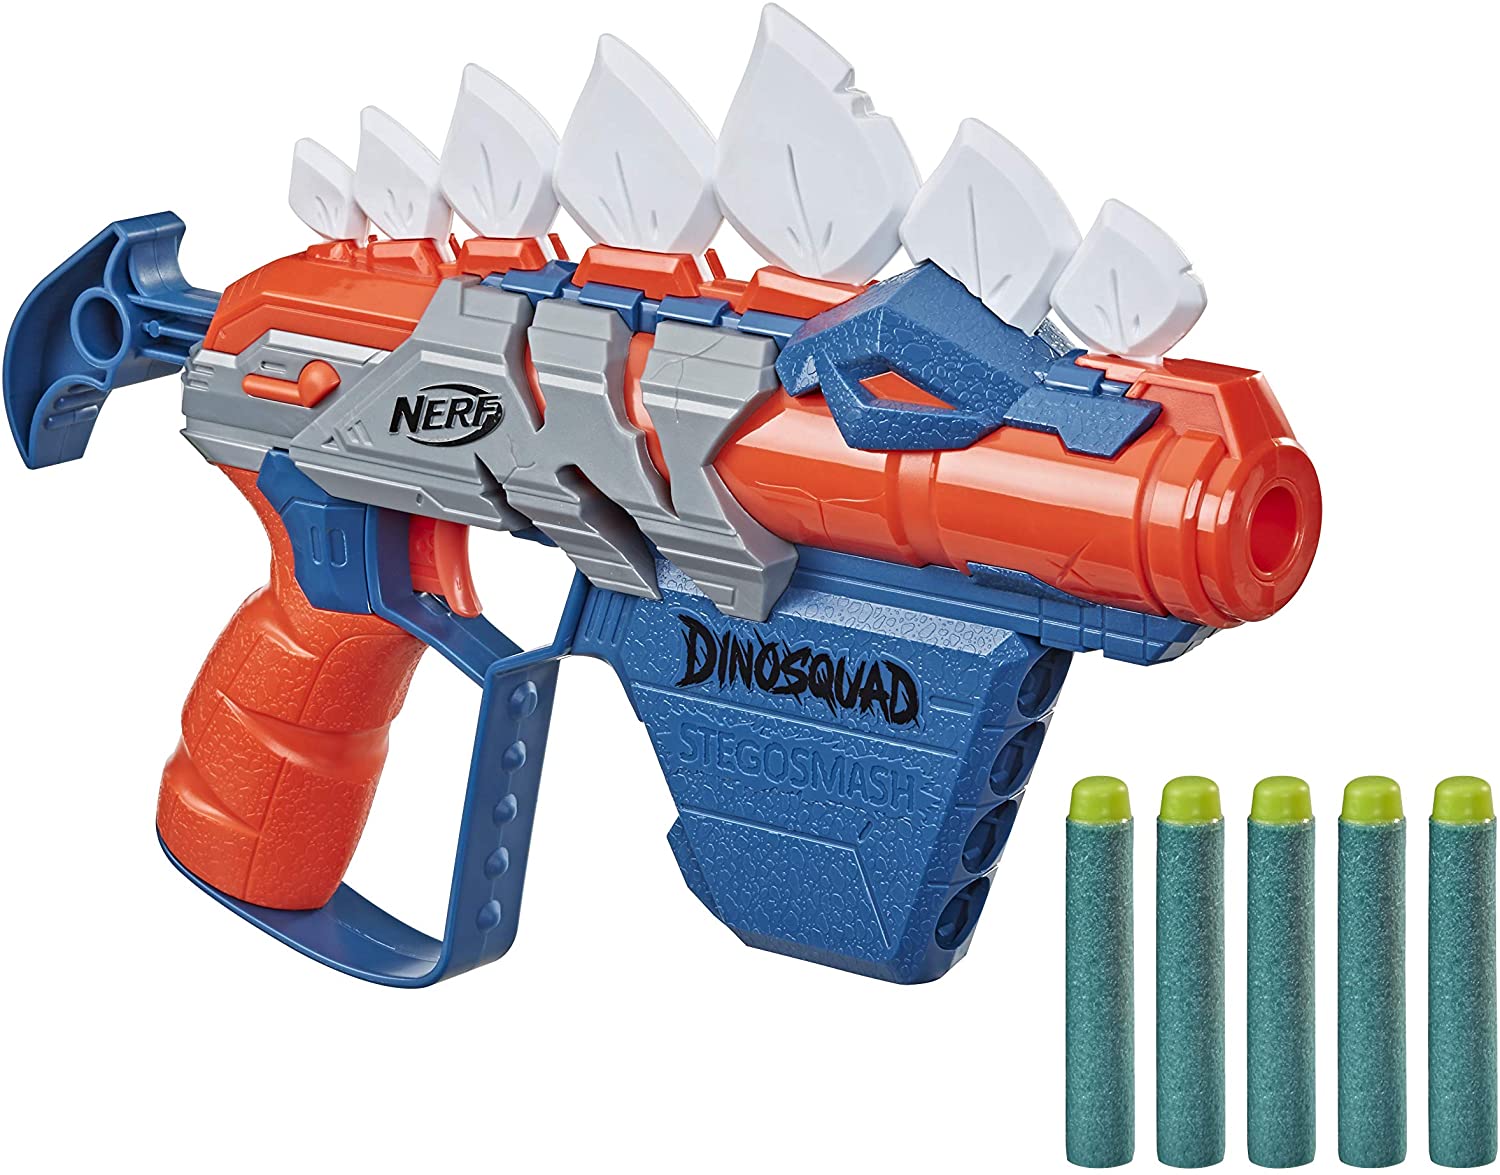 Pistolet Nerf Dino Squad Stegosmash + Flechettes Nerf Officielles